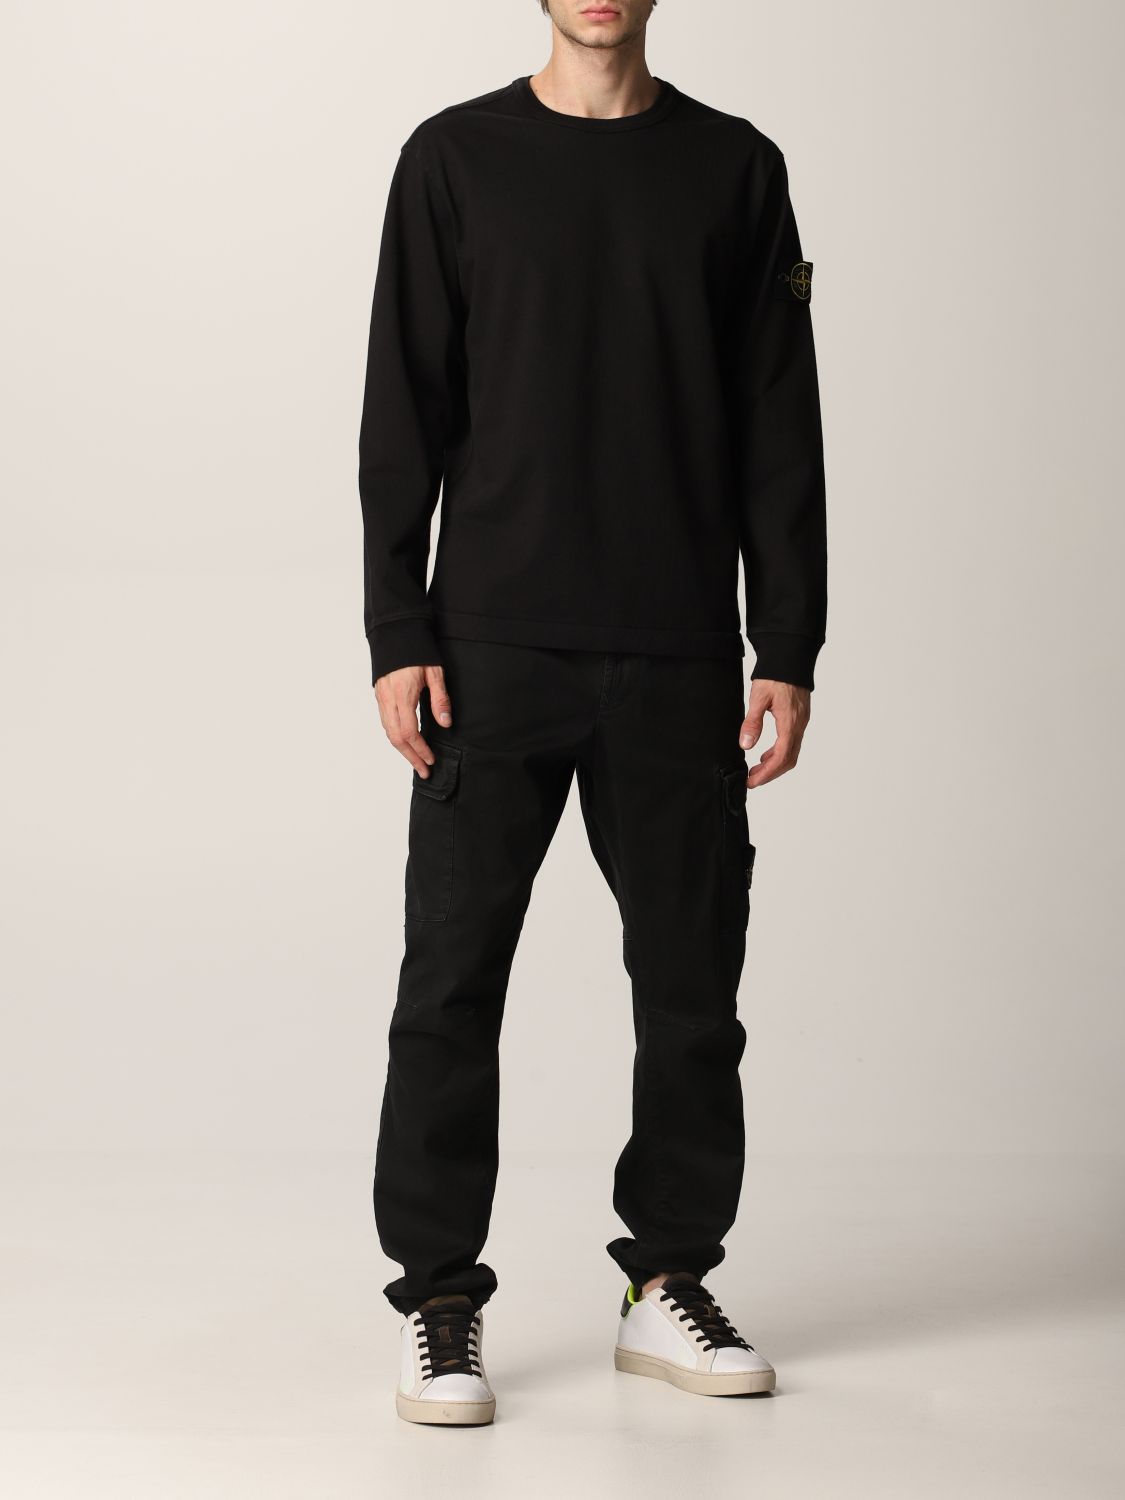 STONE ISLAND: cotton sweatshirt - Black | Sweatshirt Stone Island 